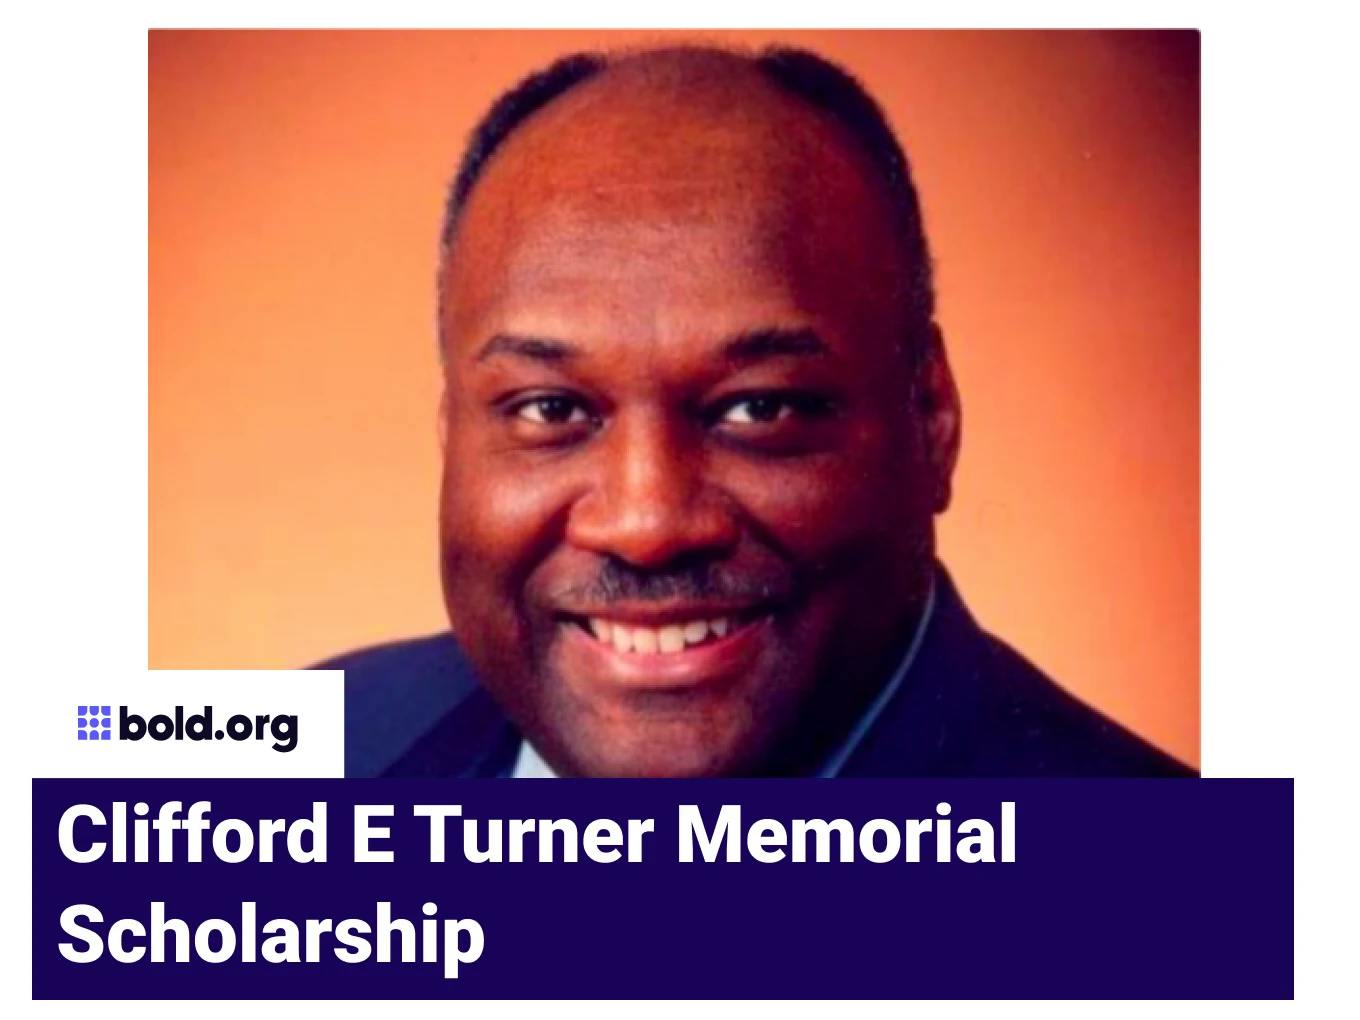 Clifford E Turner Memorial Scholarship Fund